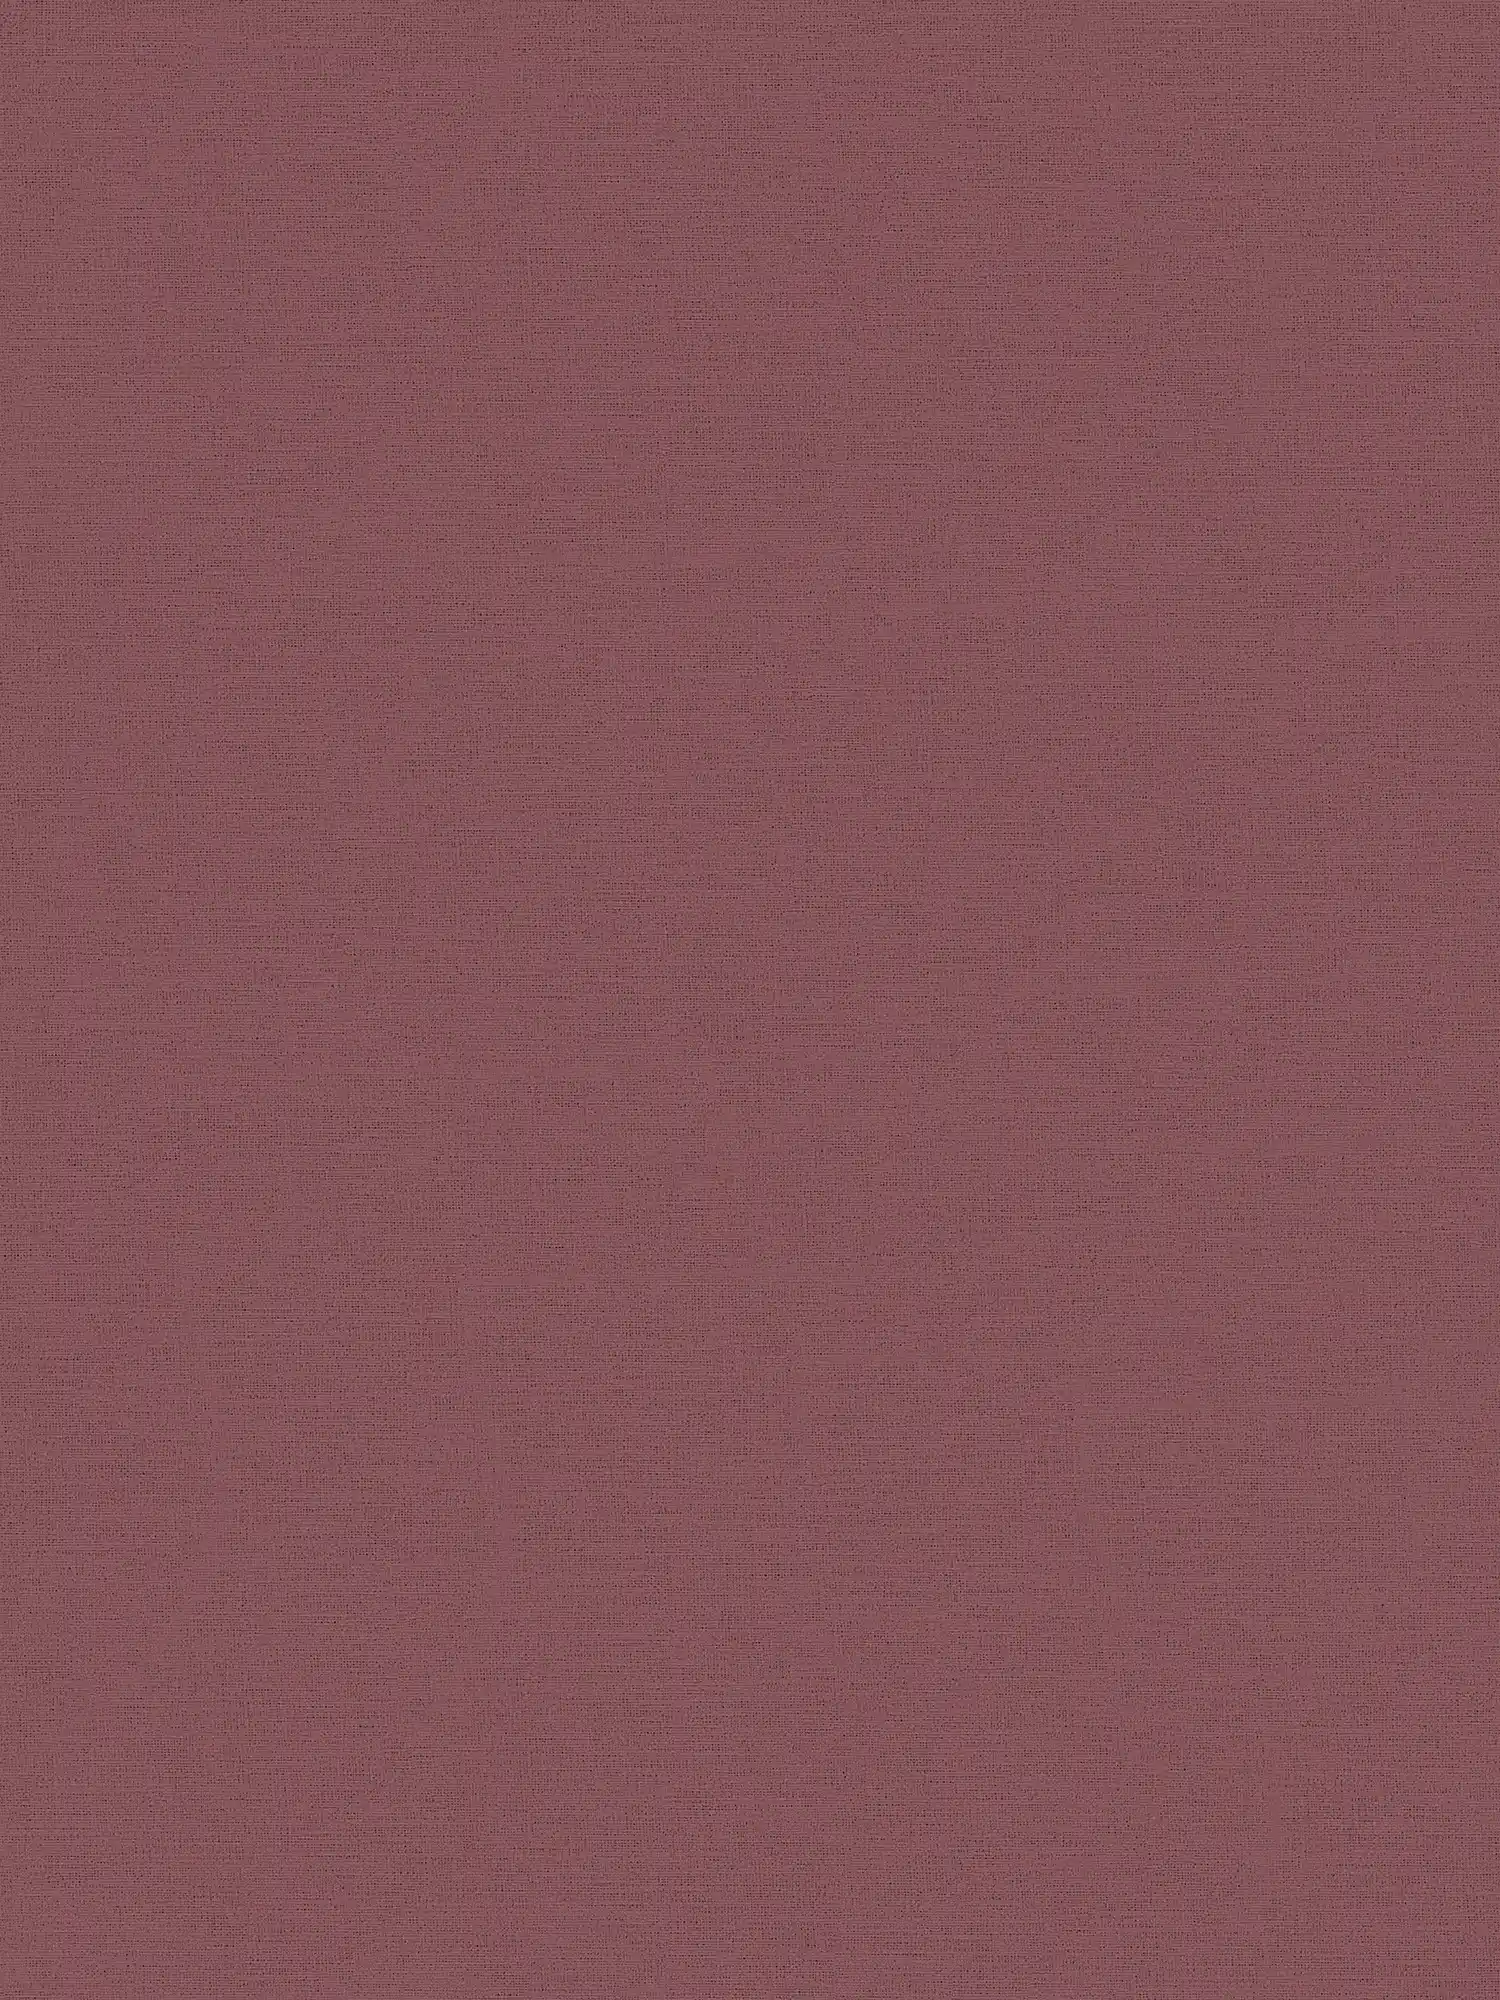 Einfarbige Tapete Bordeaux Rot mit Textiloptik
